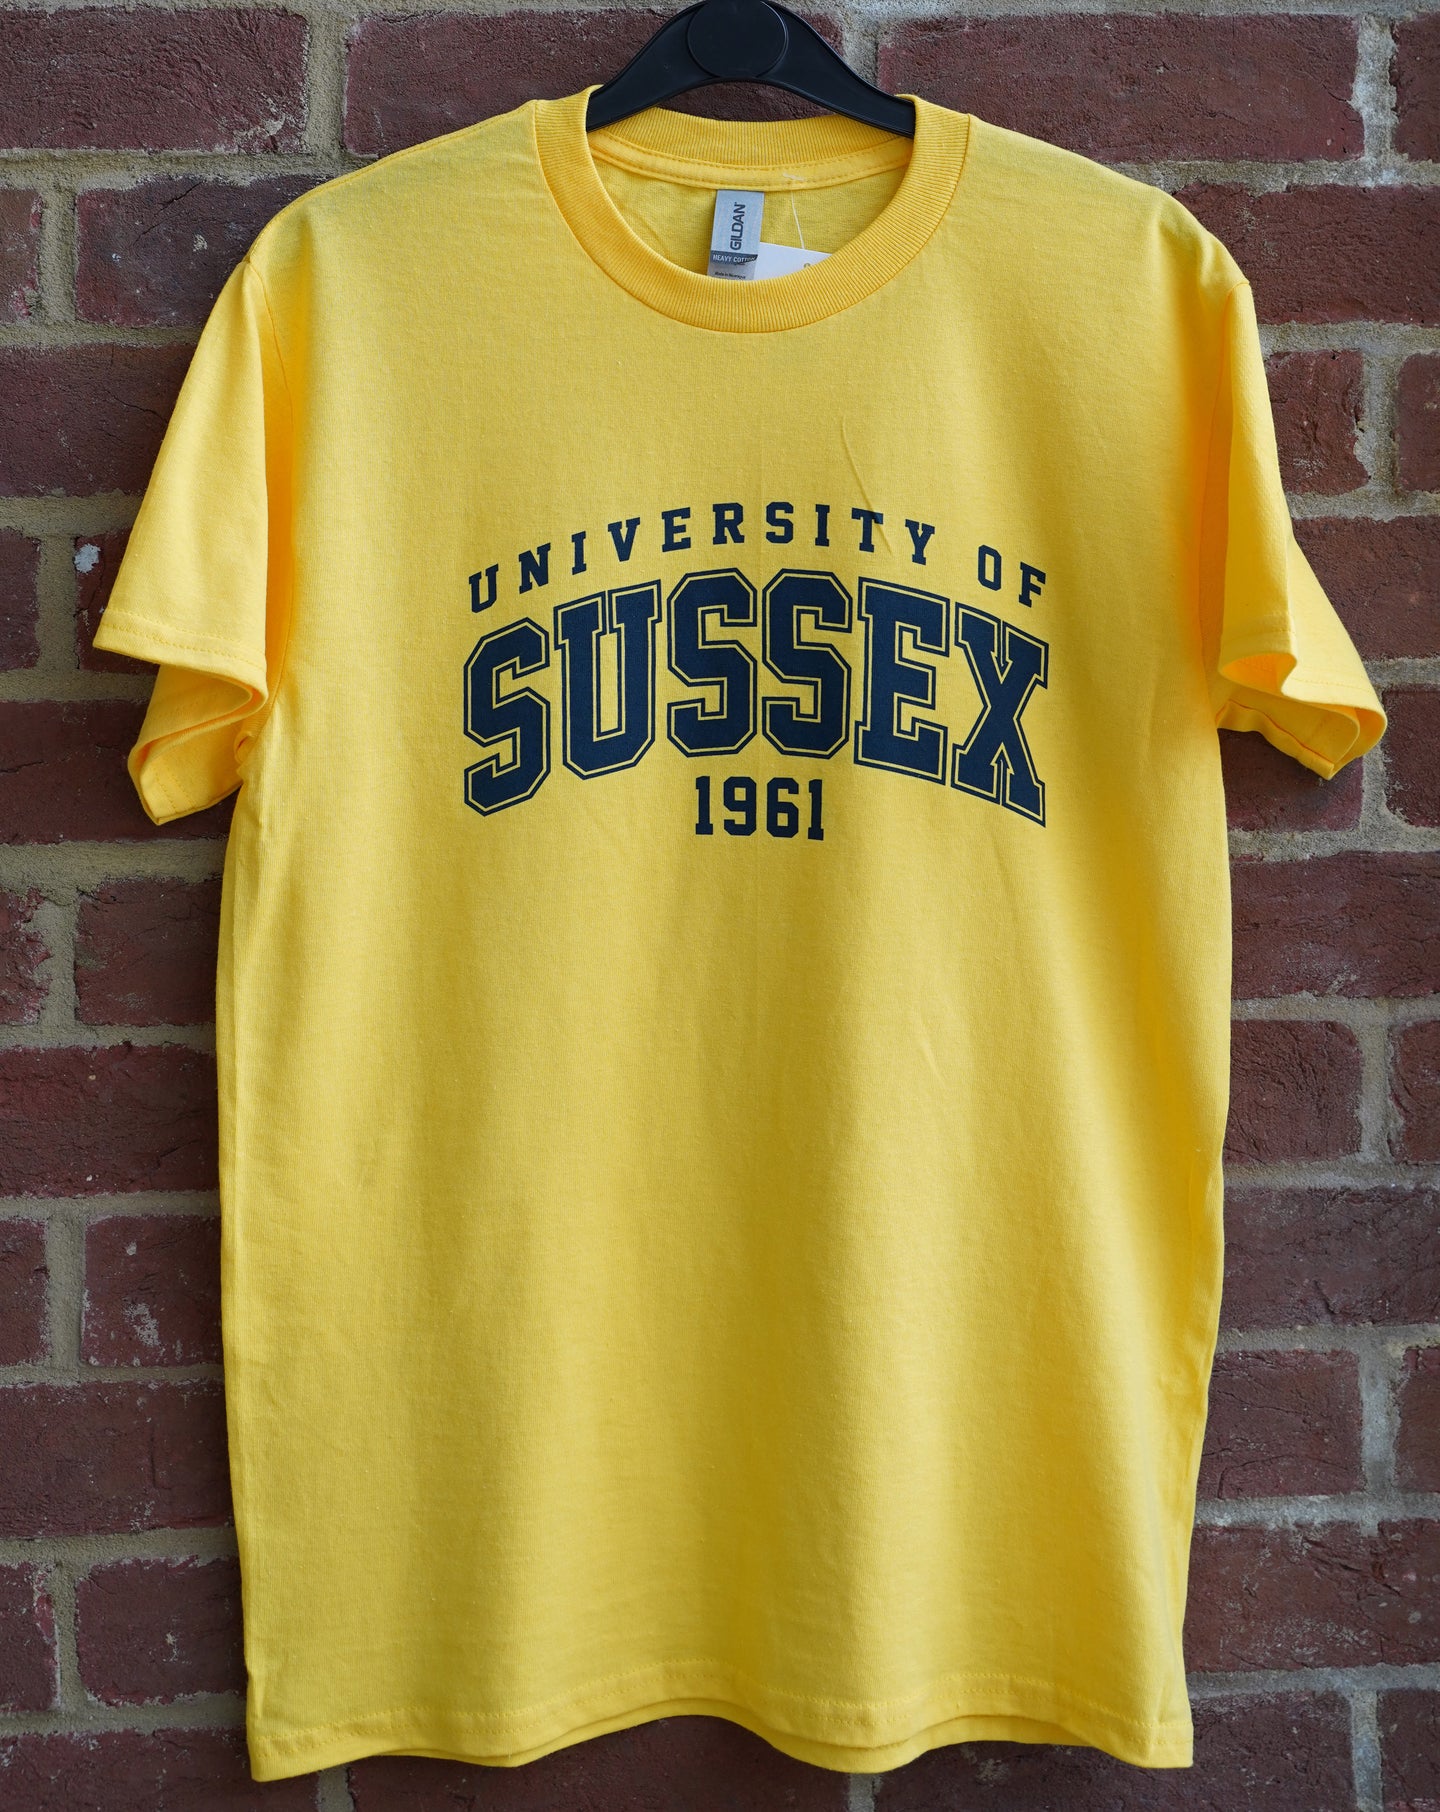 University of Sussex 1961 T-shirt